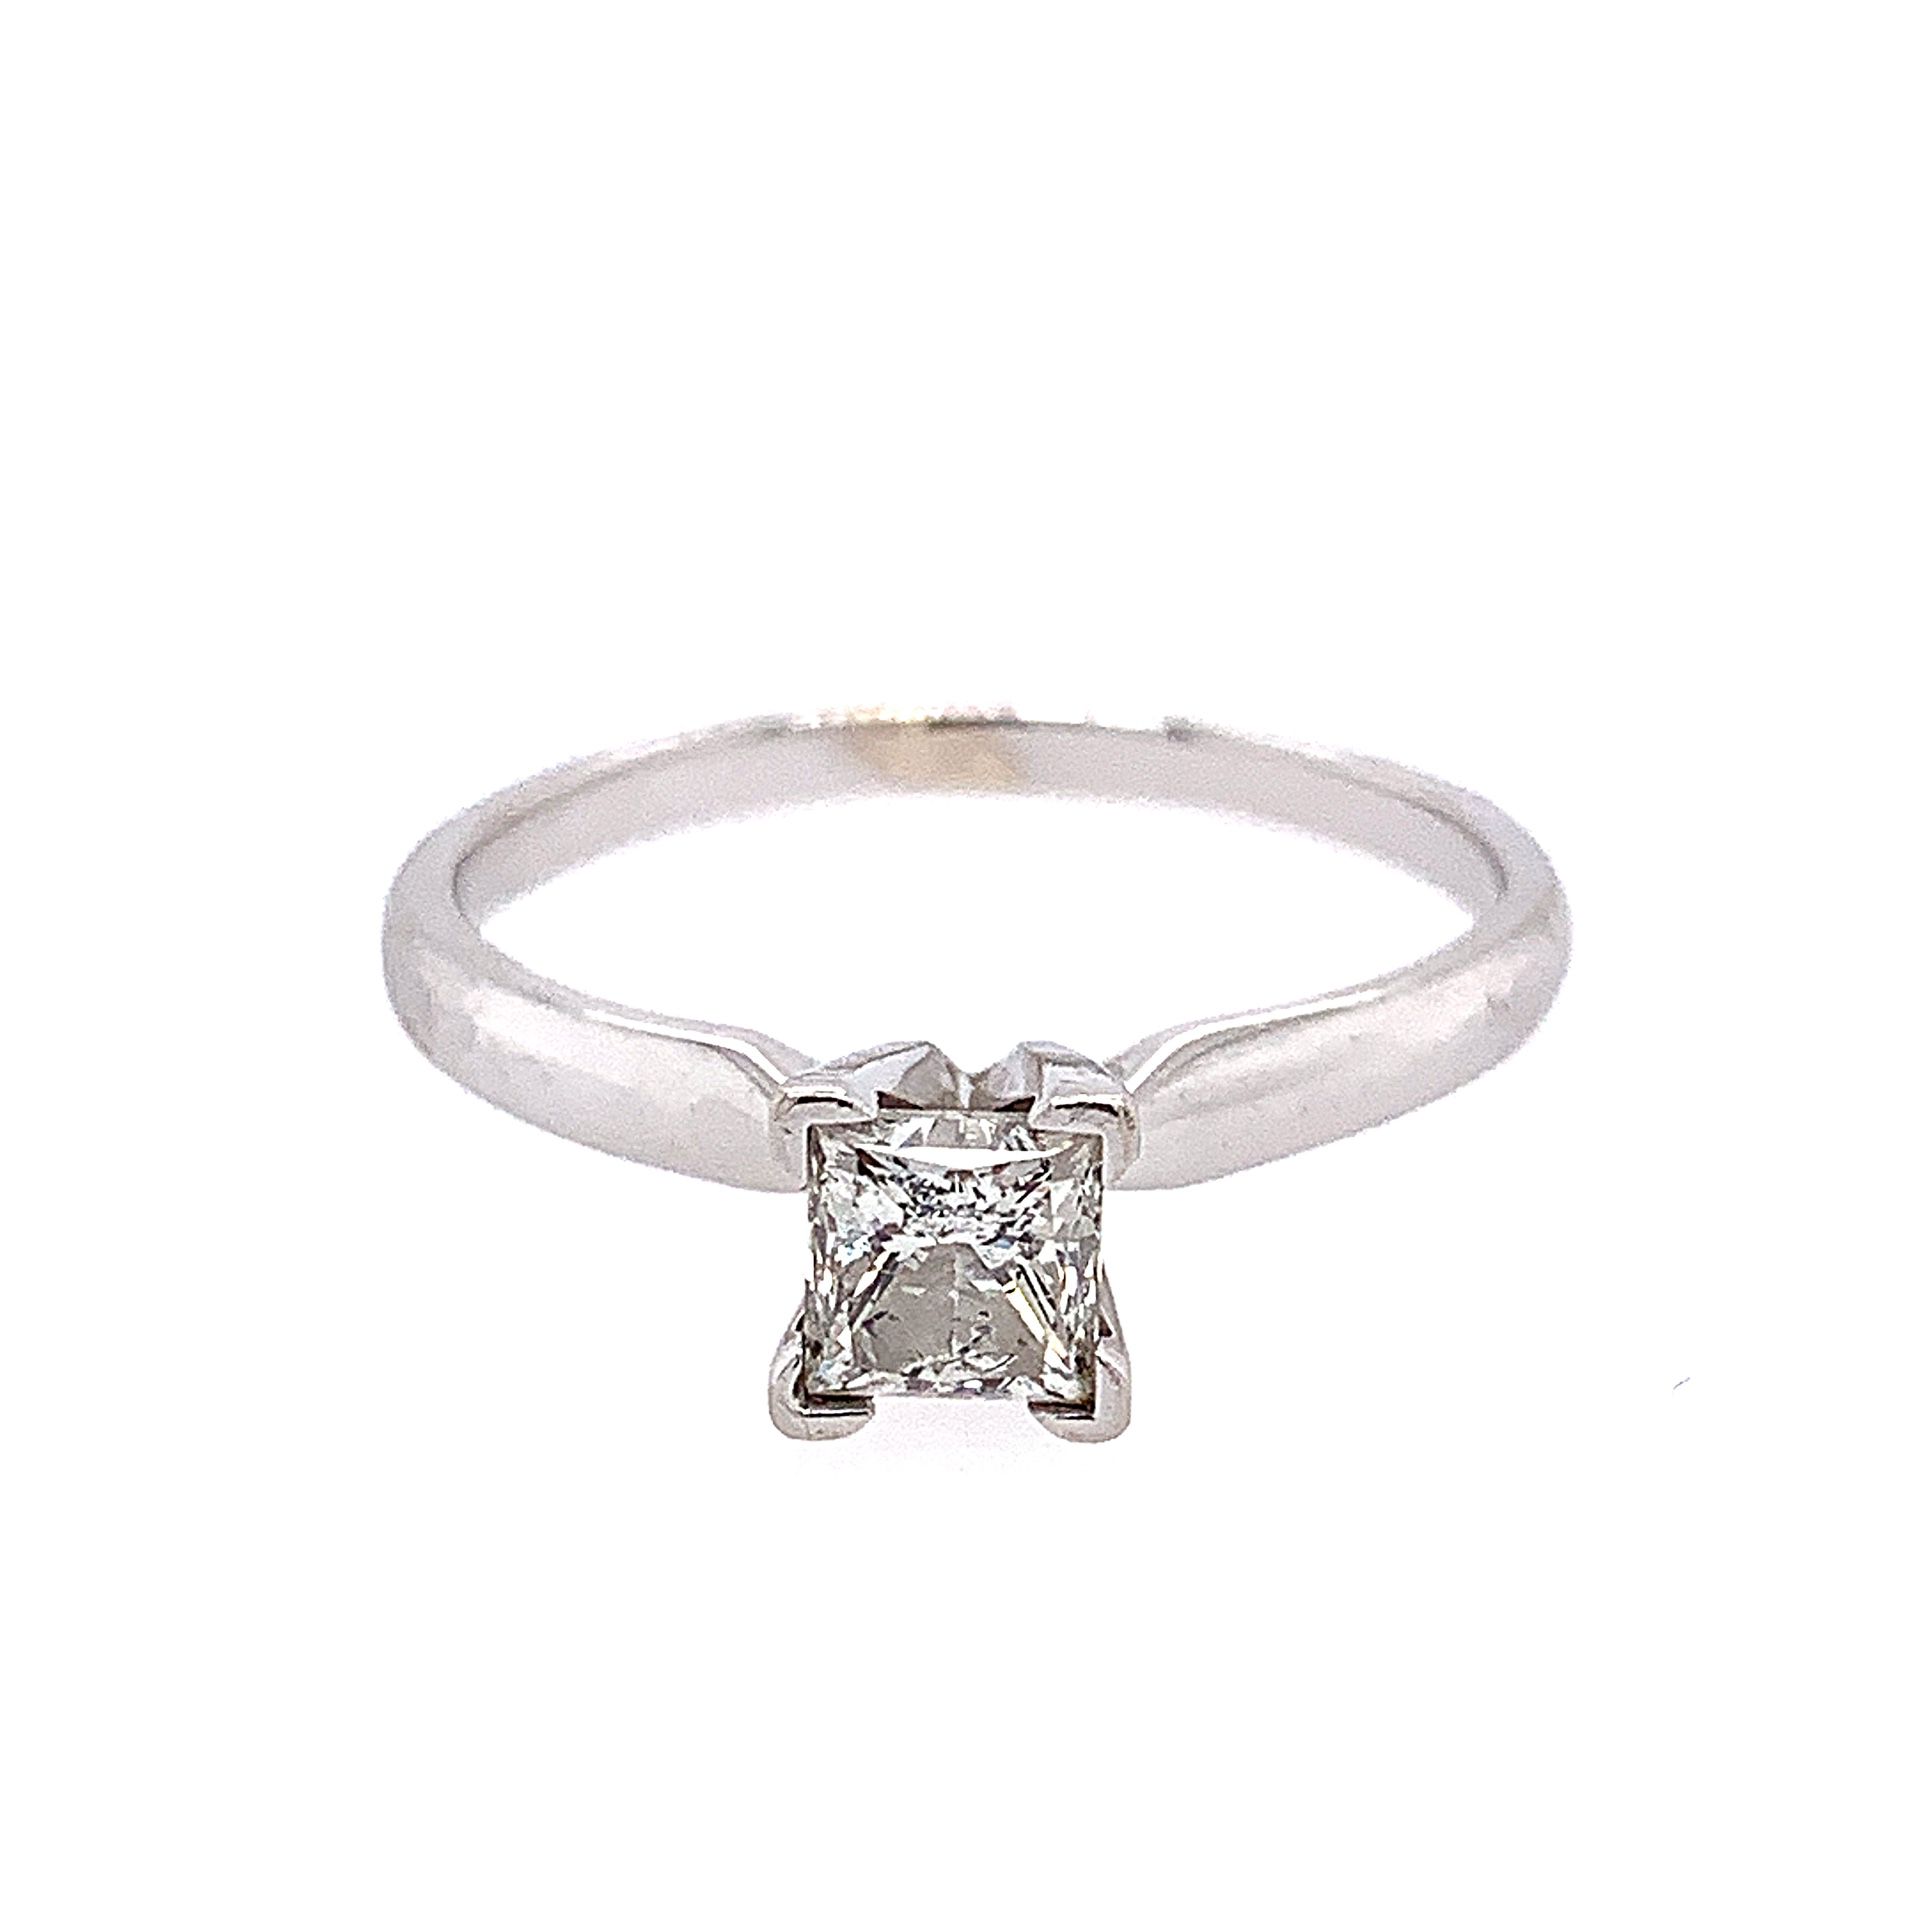 14k Princess Diamond Engagement Ring